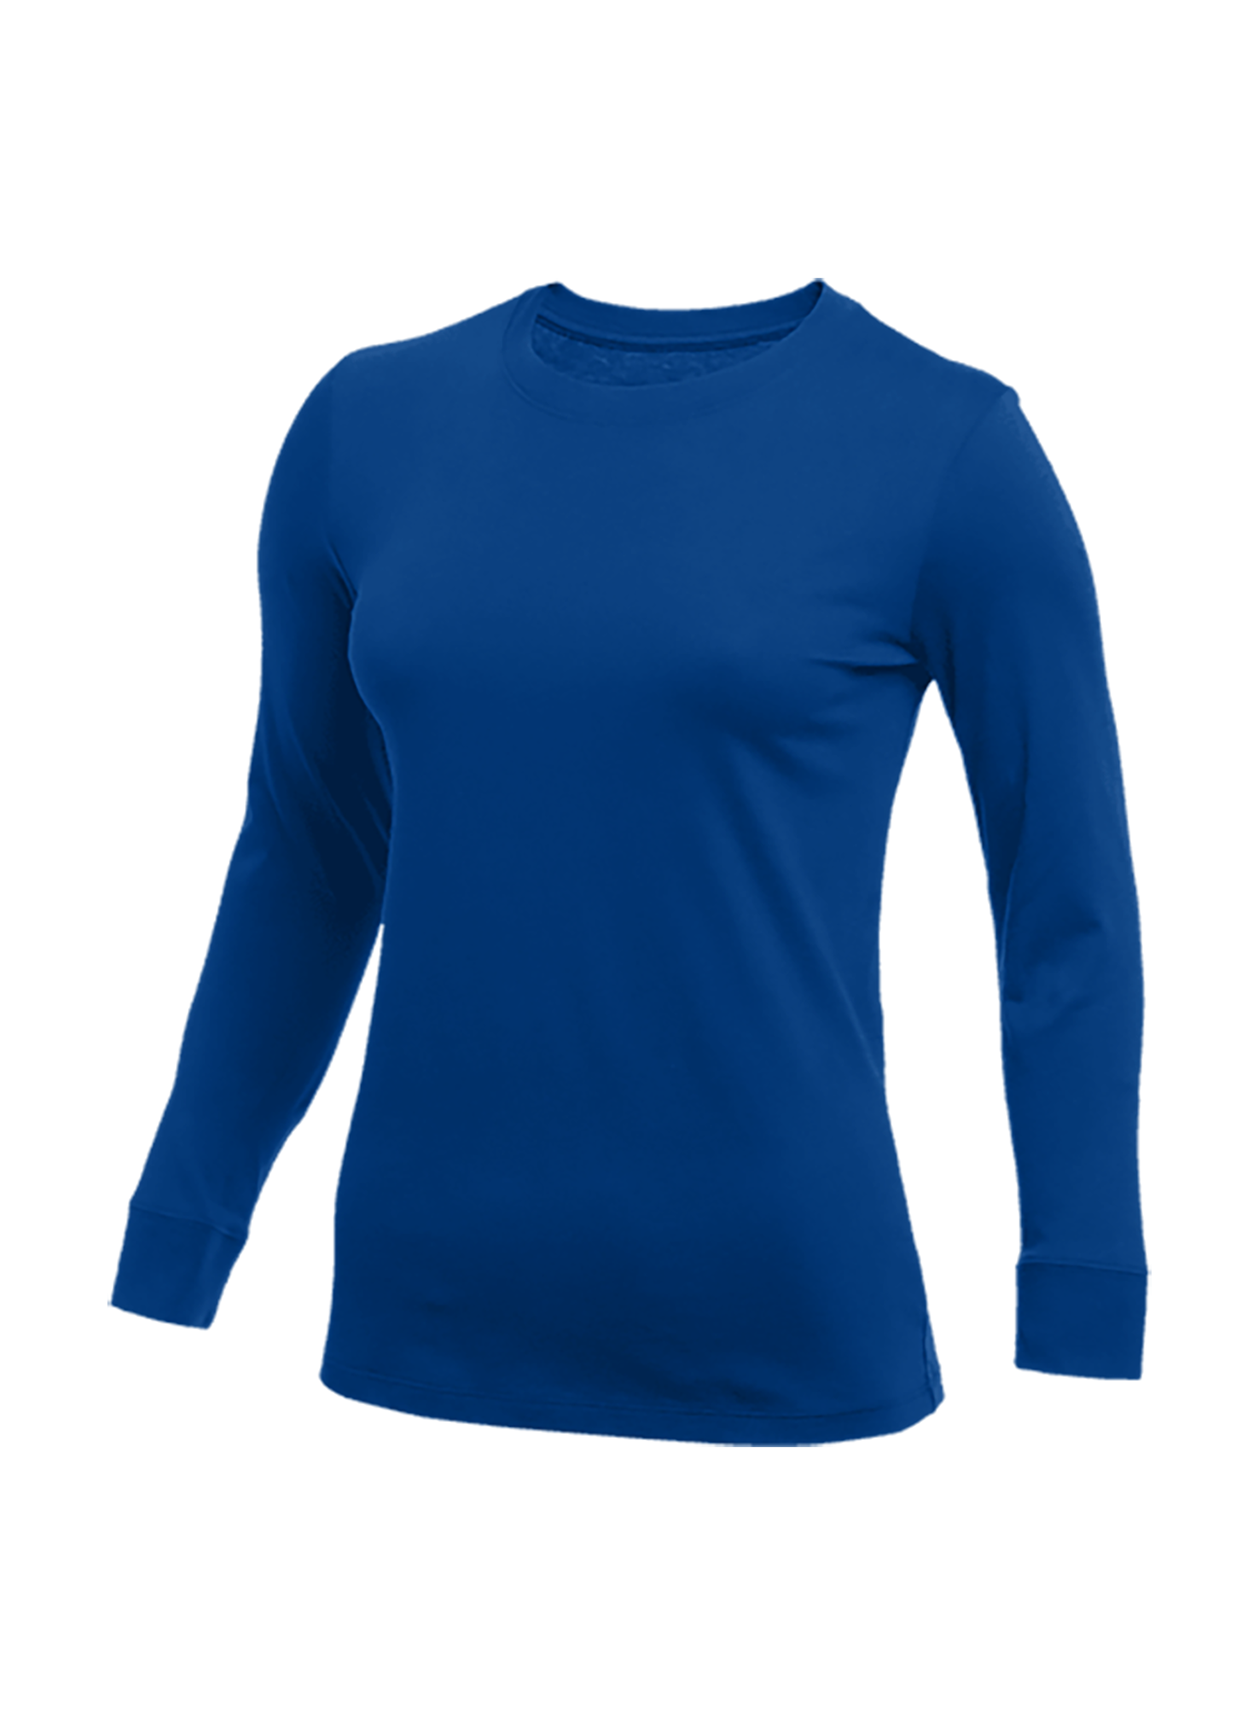 Nike Women's Game Royal Long-Sleeve T-Shirt